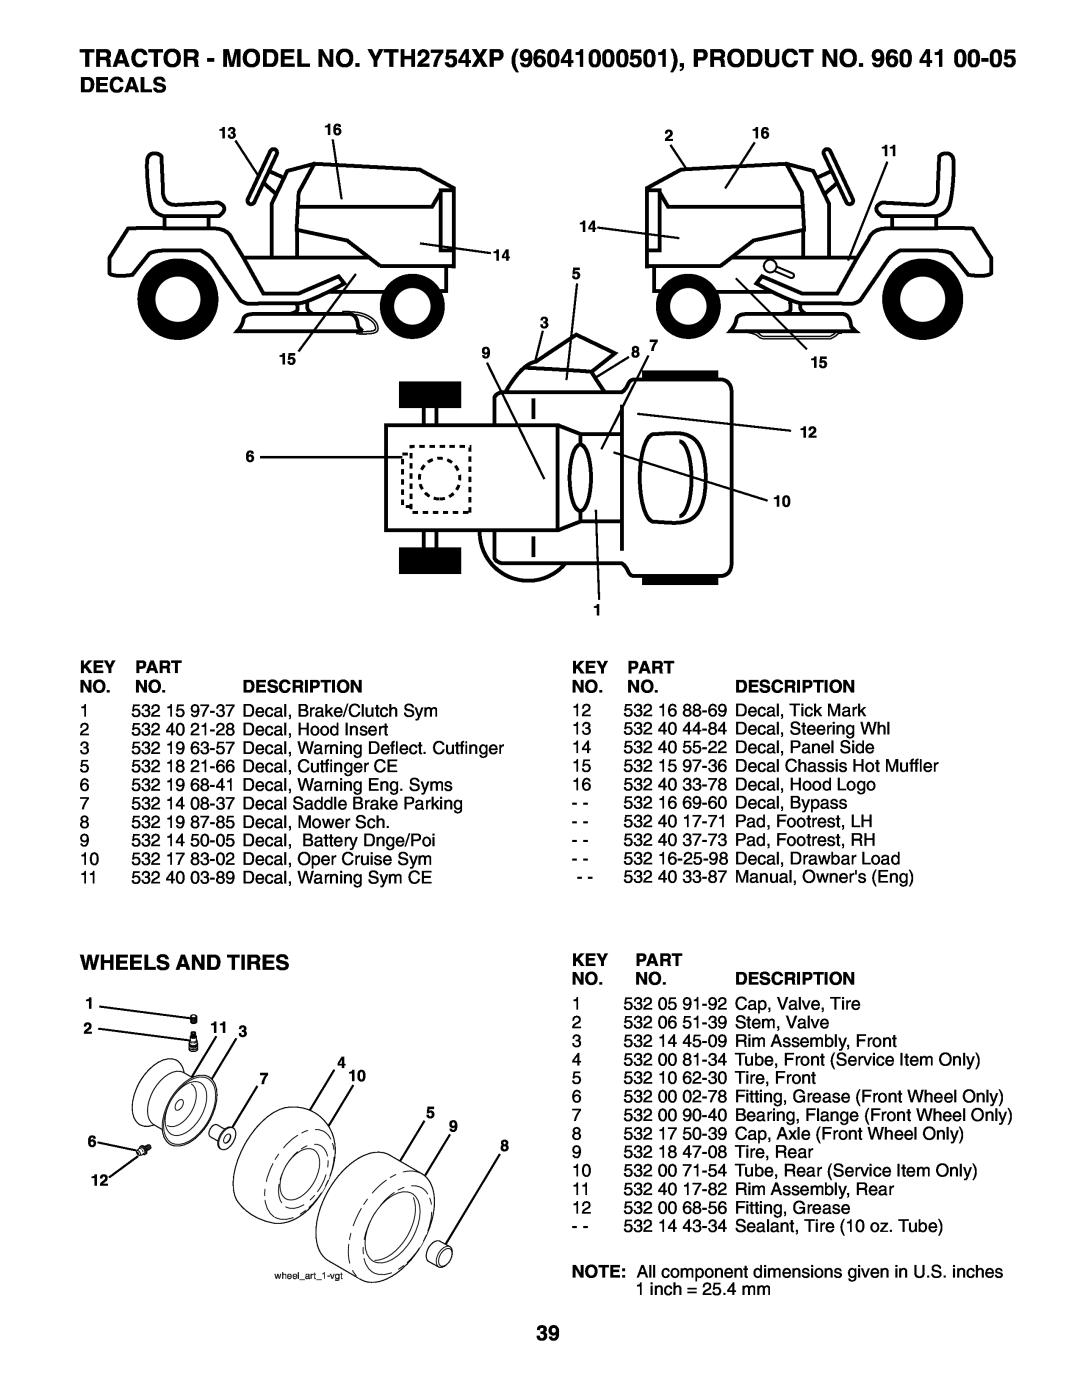 Husqvarna YTH2754XP owner manual Decals, Wheels And Tires, Part, Description 